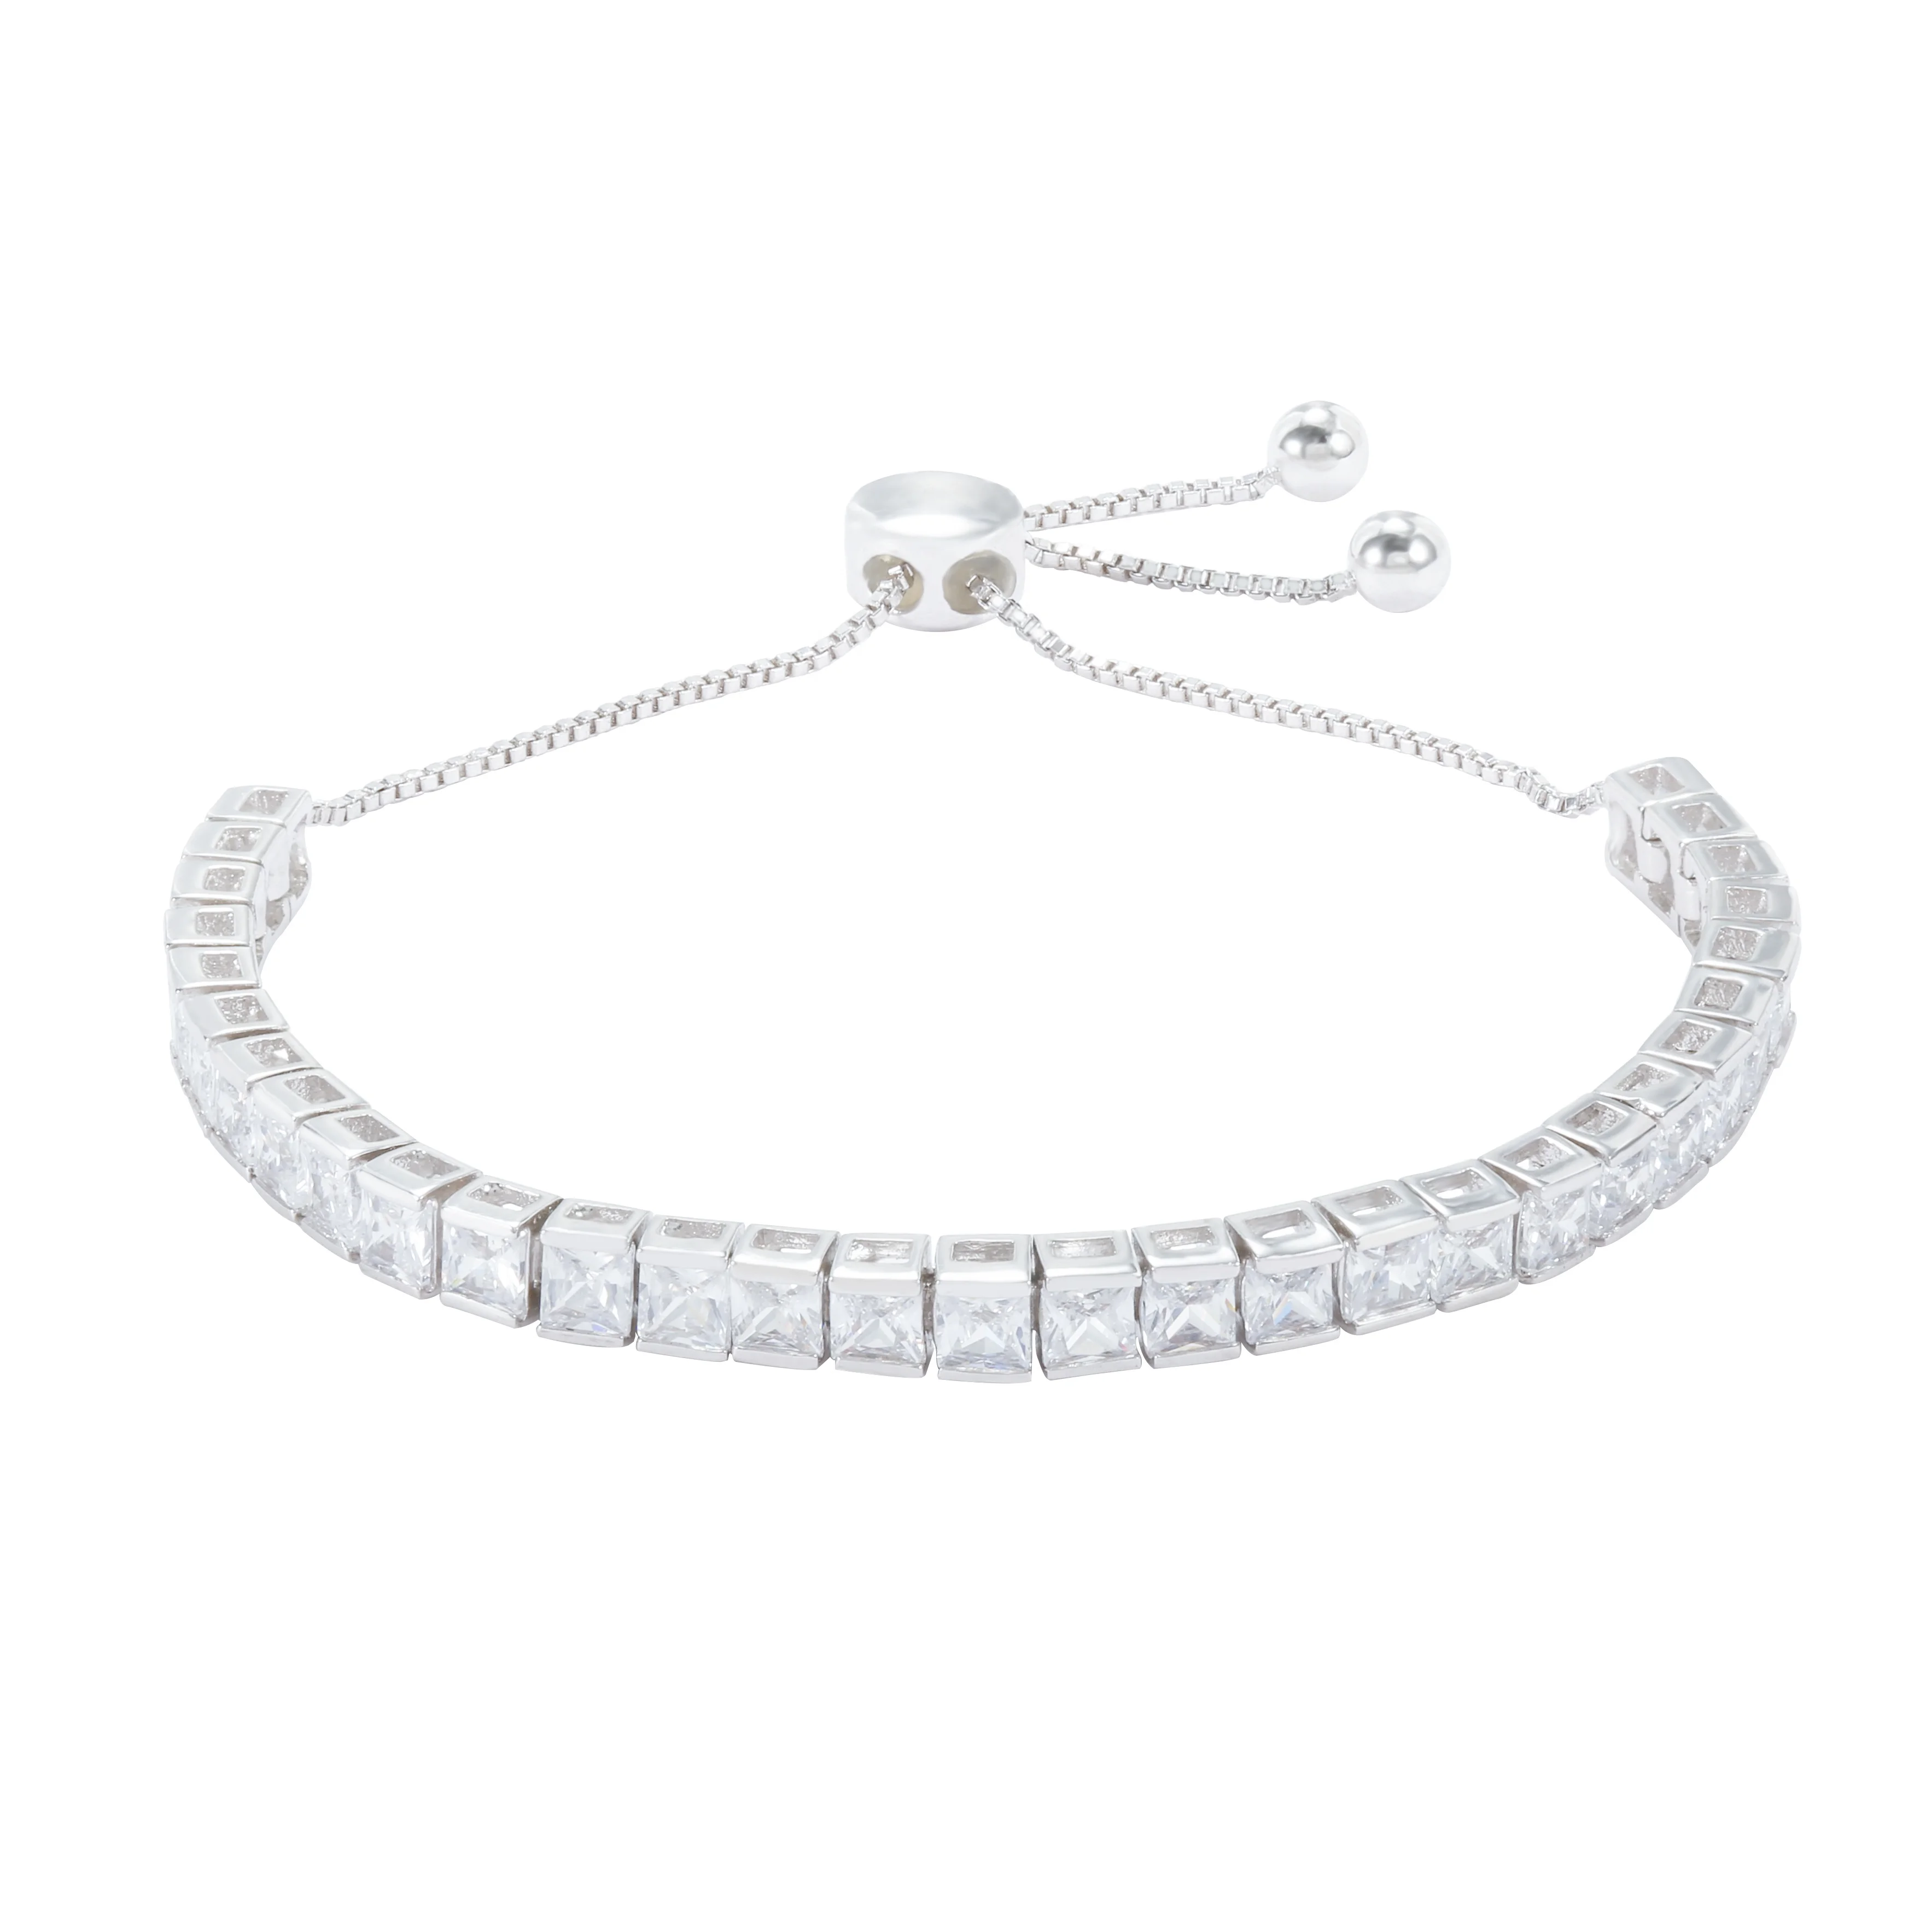 S925 Tennis Bracelet with Sparking Cubic Zirconia Adjustable Bracelet for Women Silver Tennis Bracelet